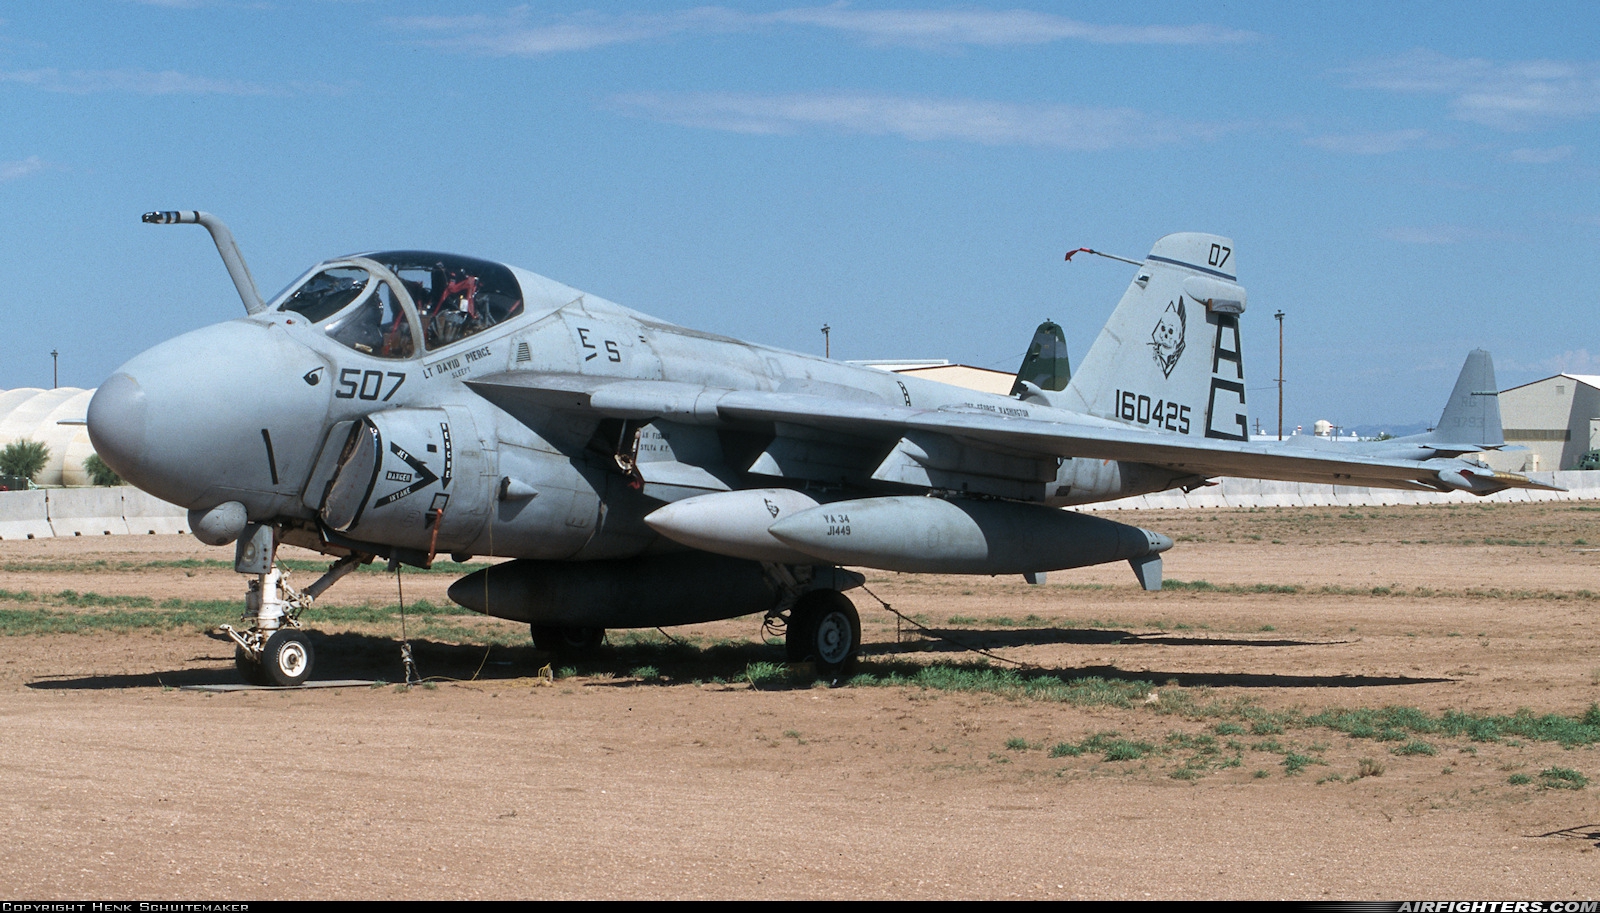 USA - Navy Grumman A-6E Intruder (G-128) 160425 at Tucson - Davis-Monthan AFB (DMA / KDMA), USA